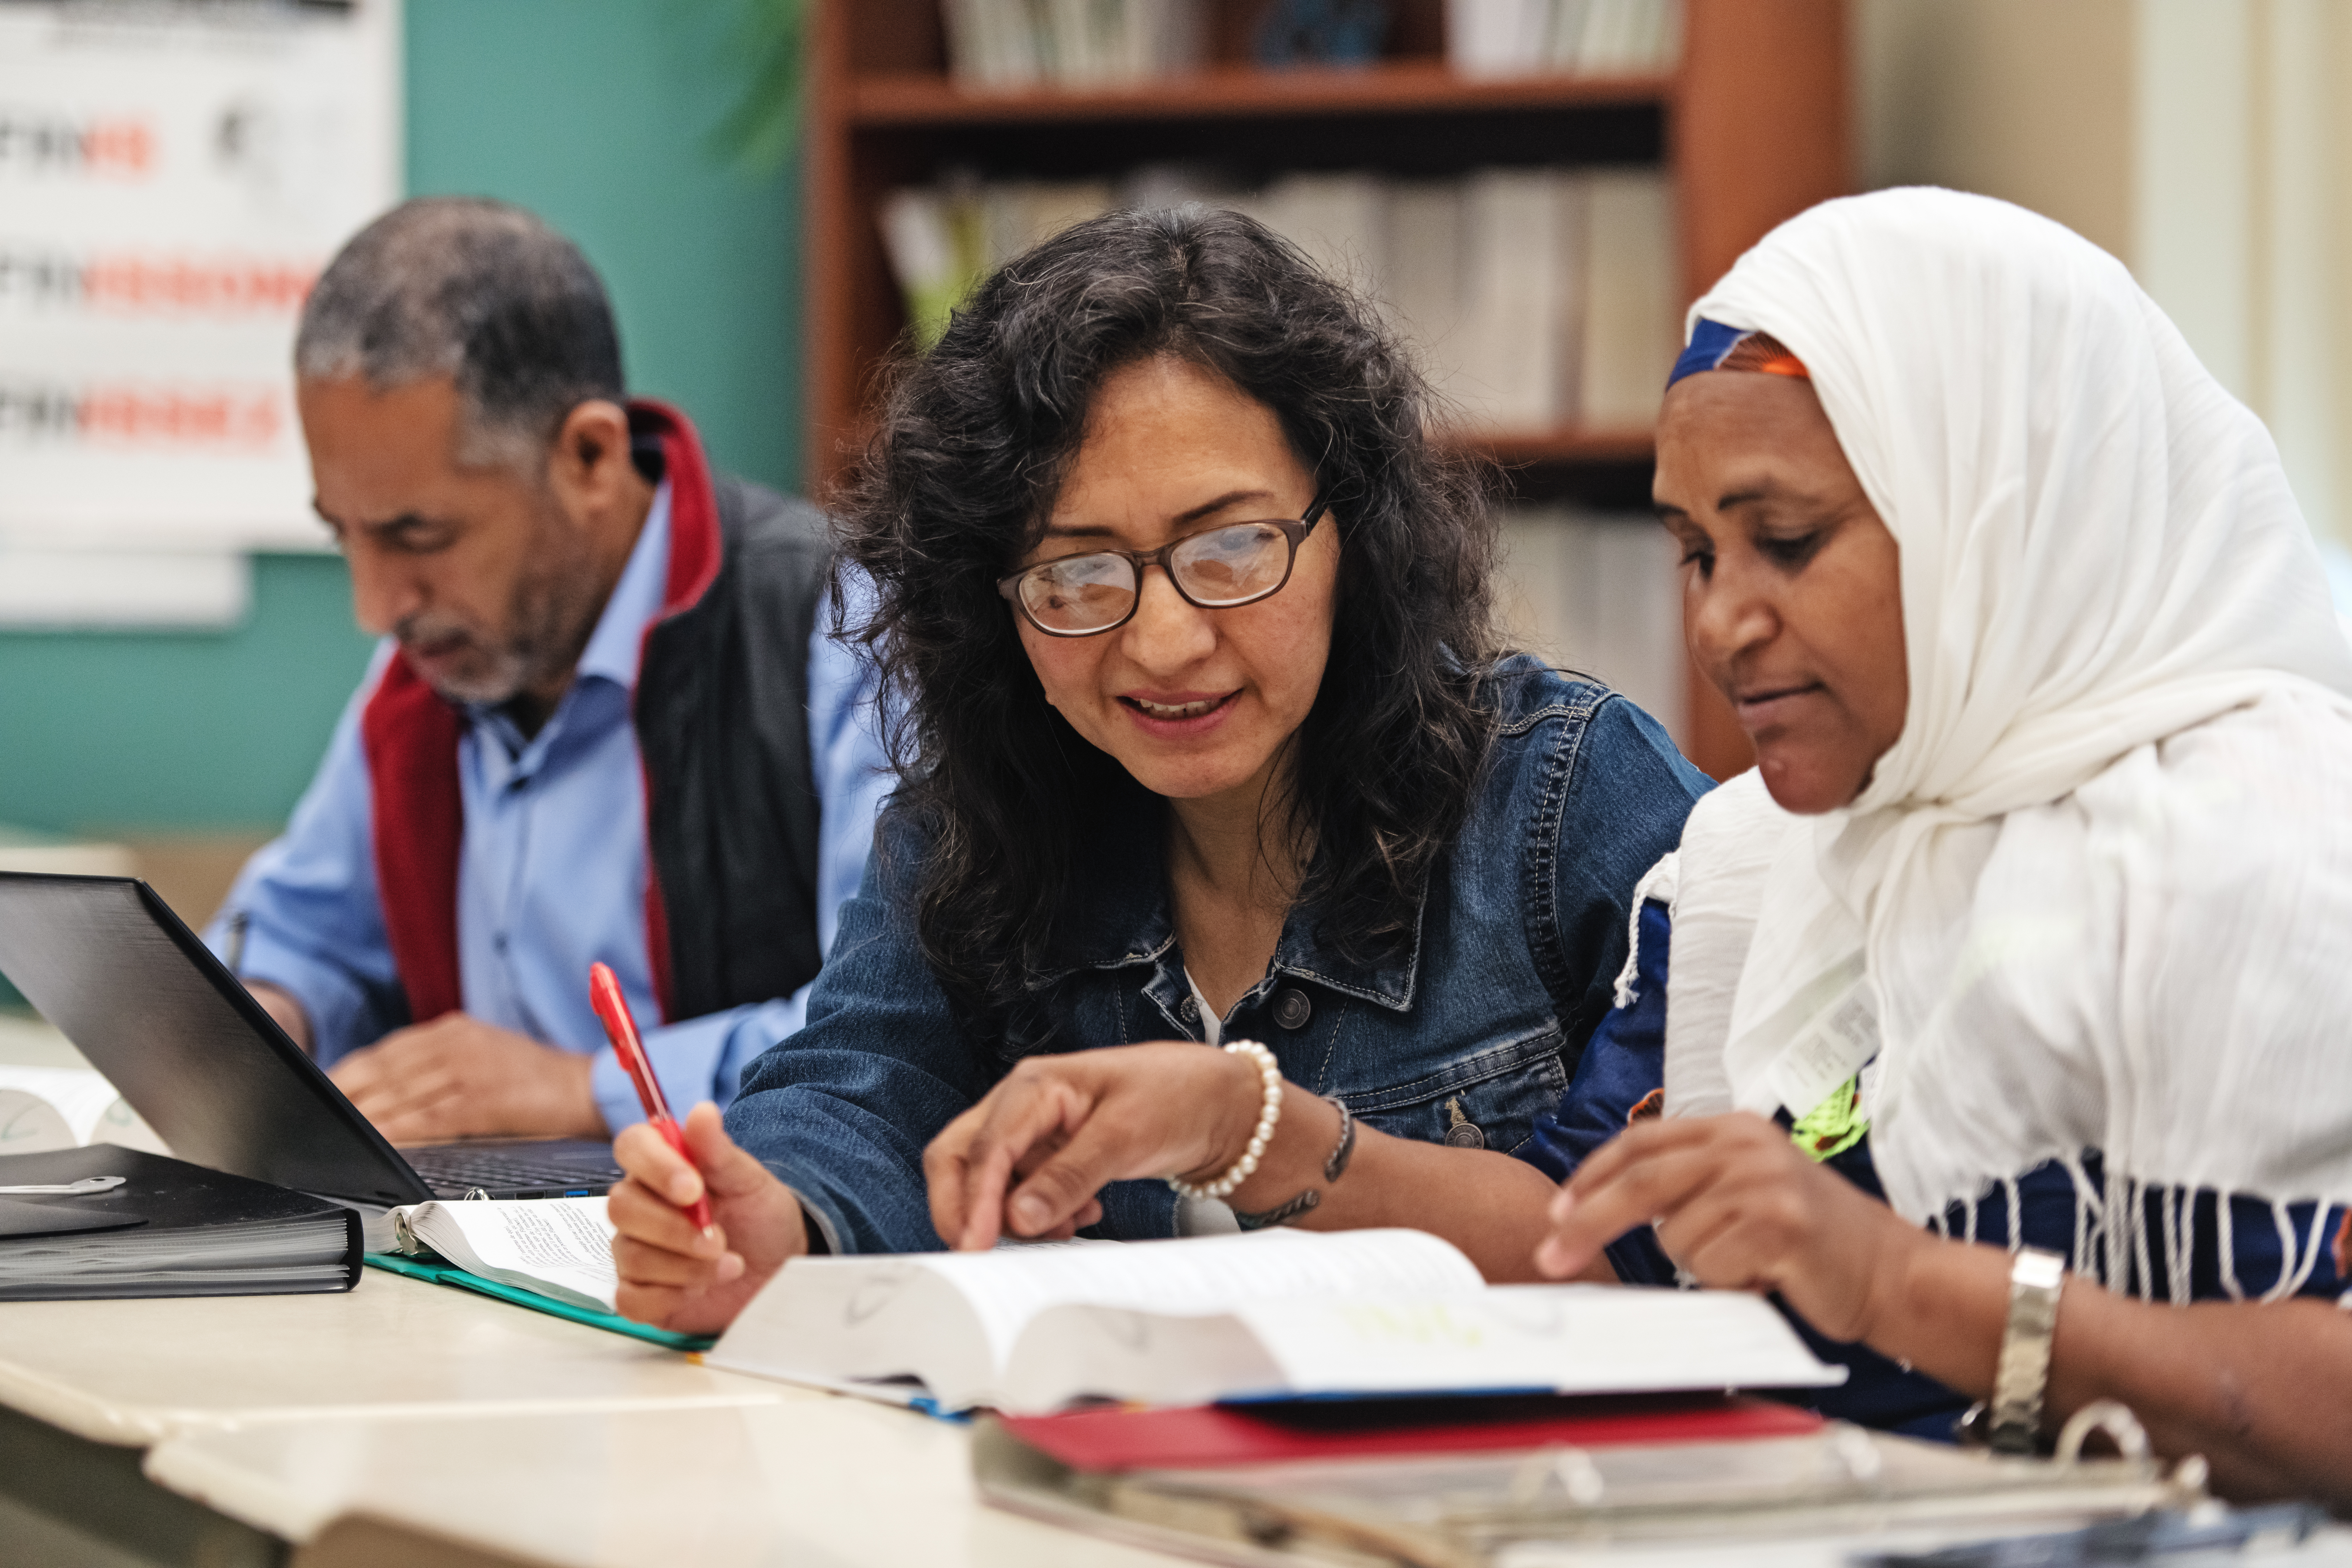 Multi-ethnic adults education classroom